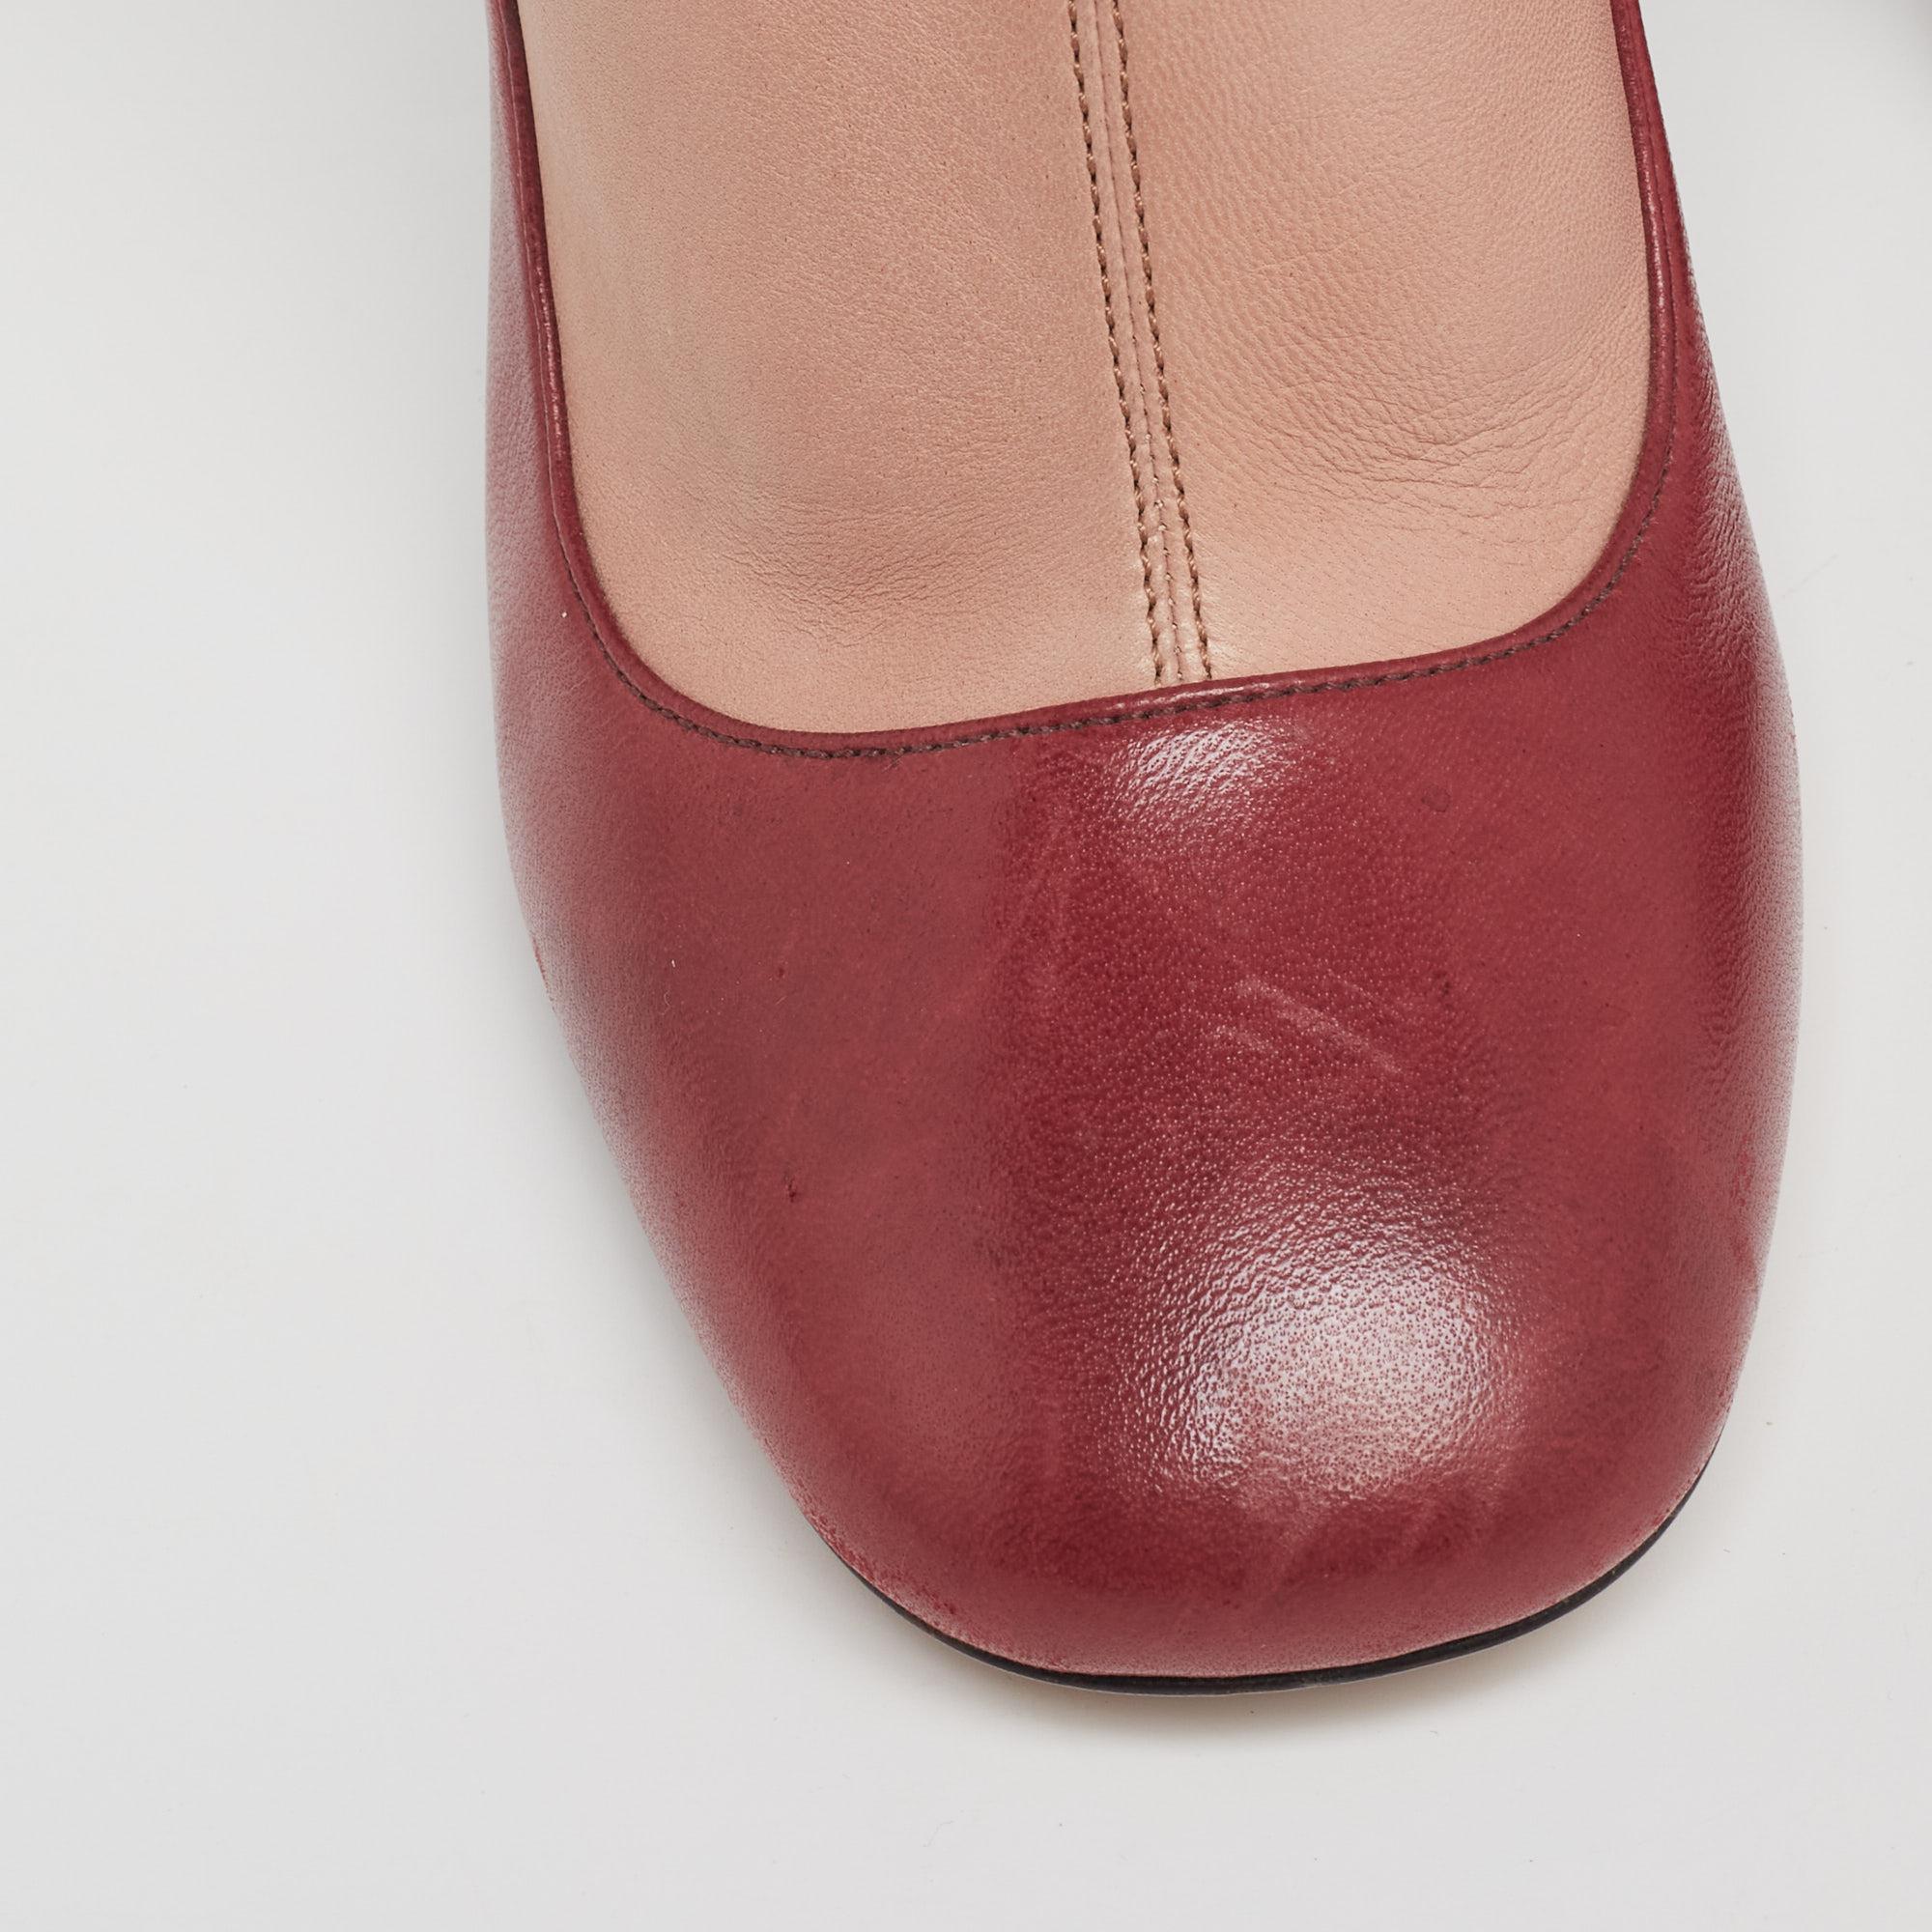 Prada Beige/Burgundy Leather Mid Calf Length Boots Size 39 2